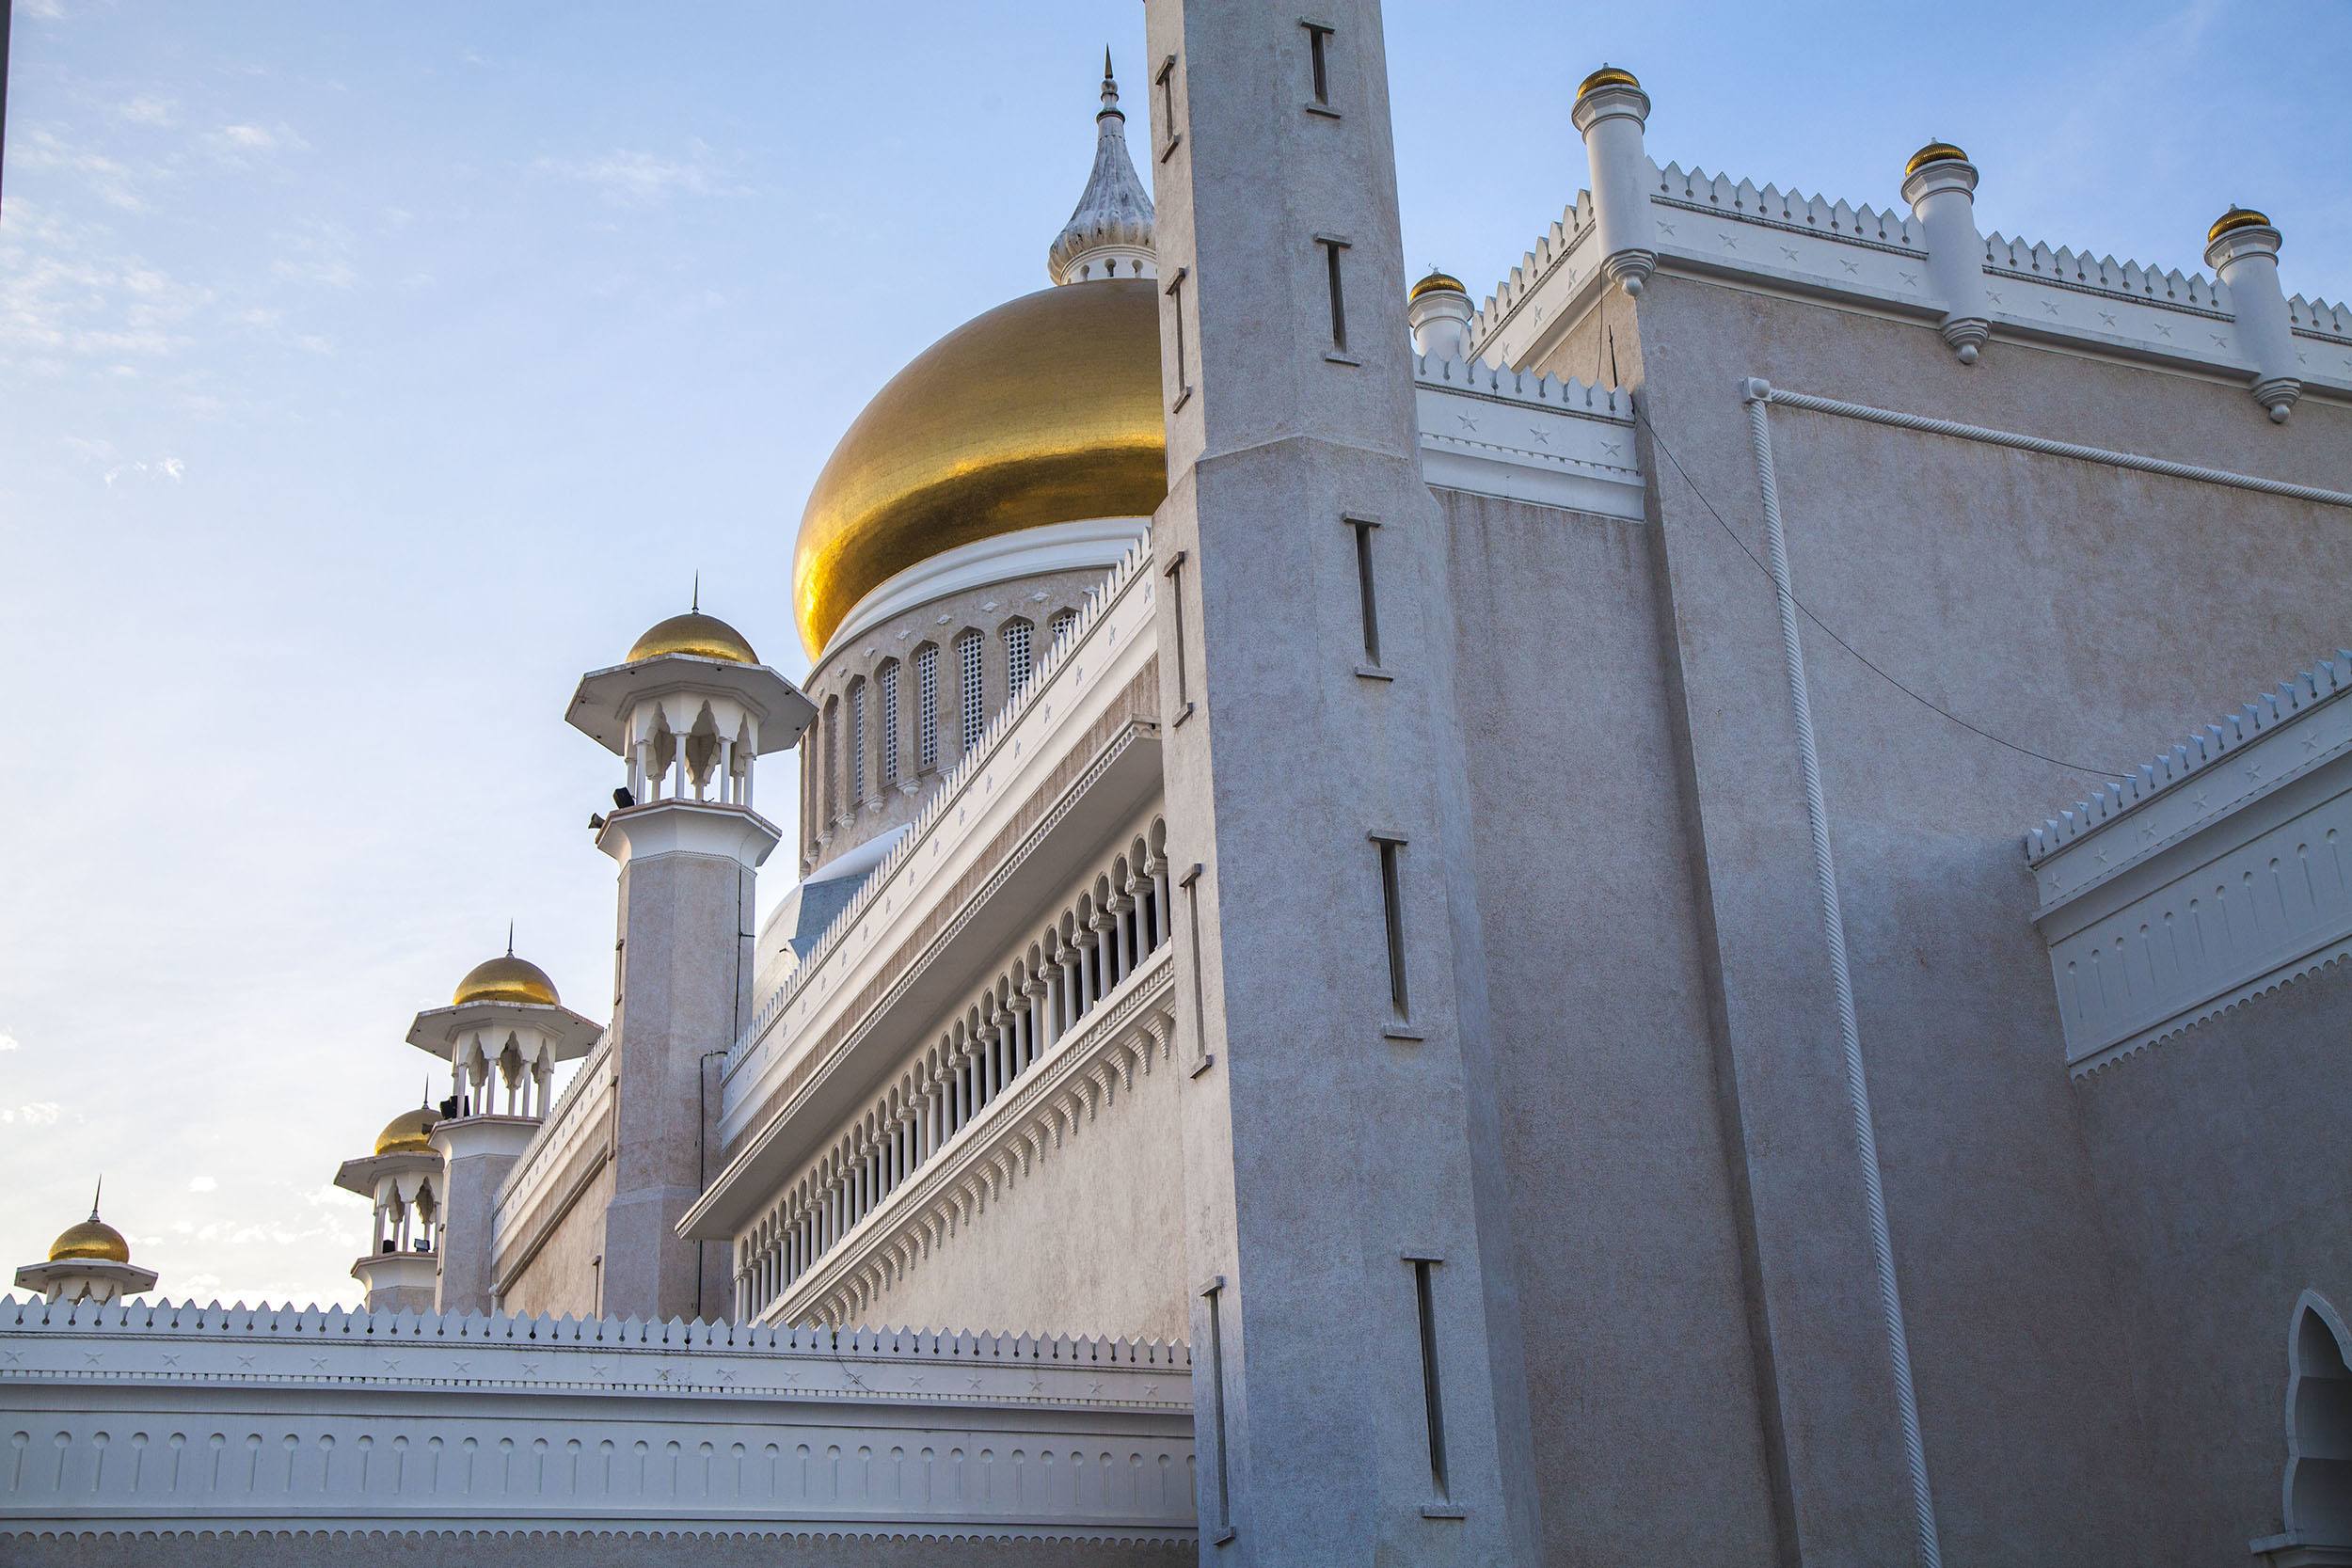 Masjid Omar Ali Saifuddien in Bandar Seri Begawan Brunei at dusk